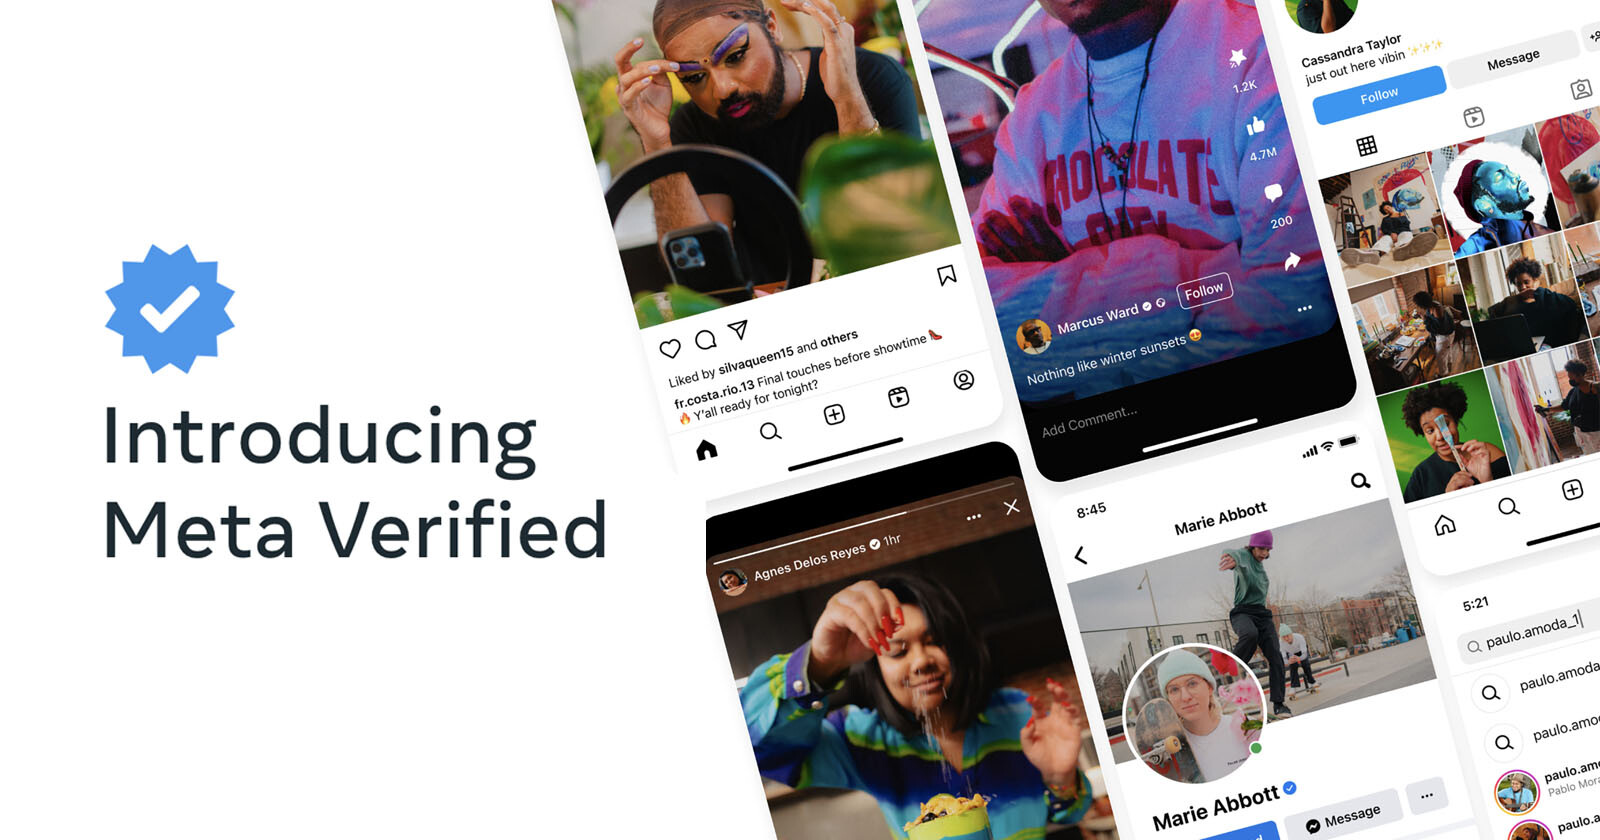  meta paid verification program instagram rolling out 